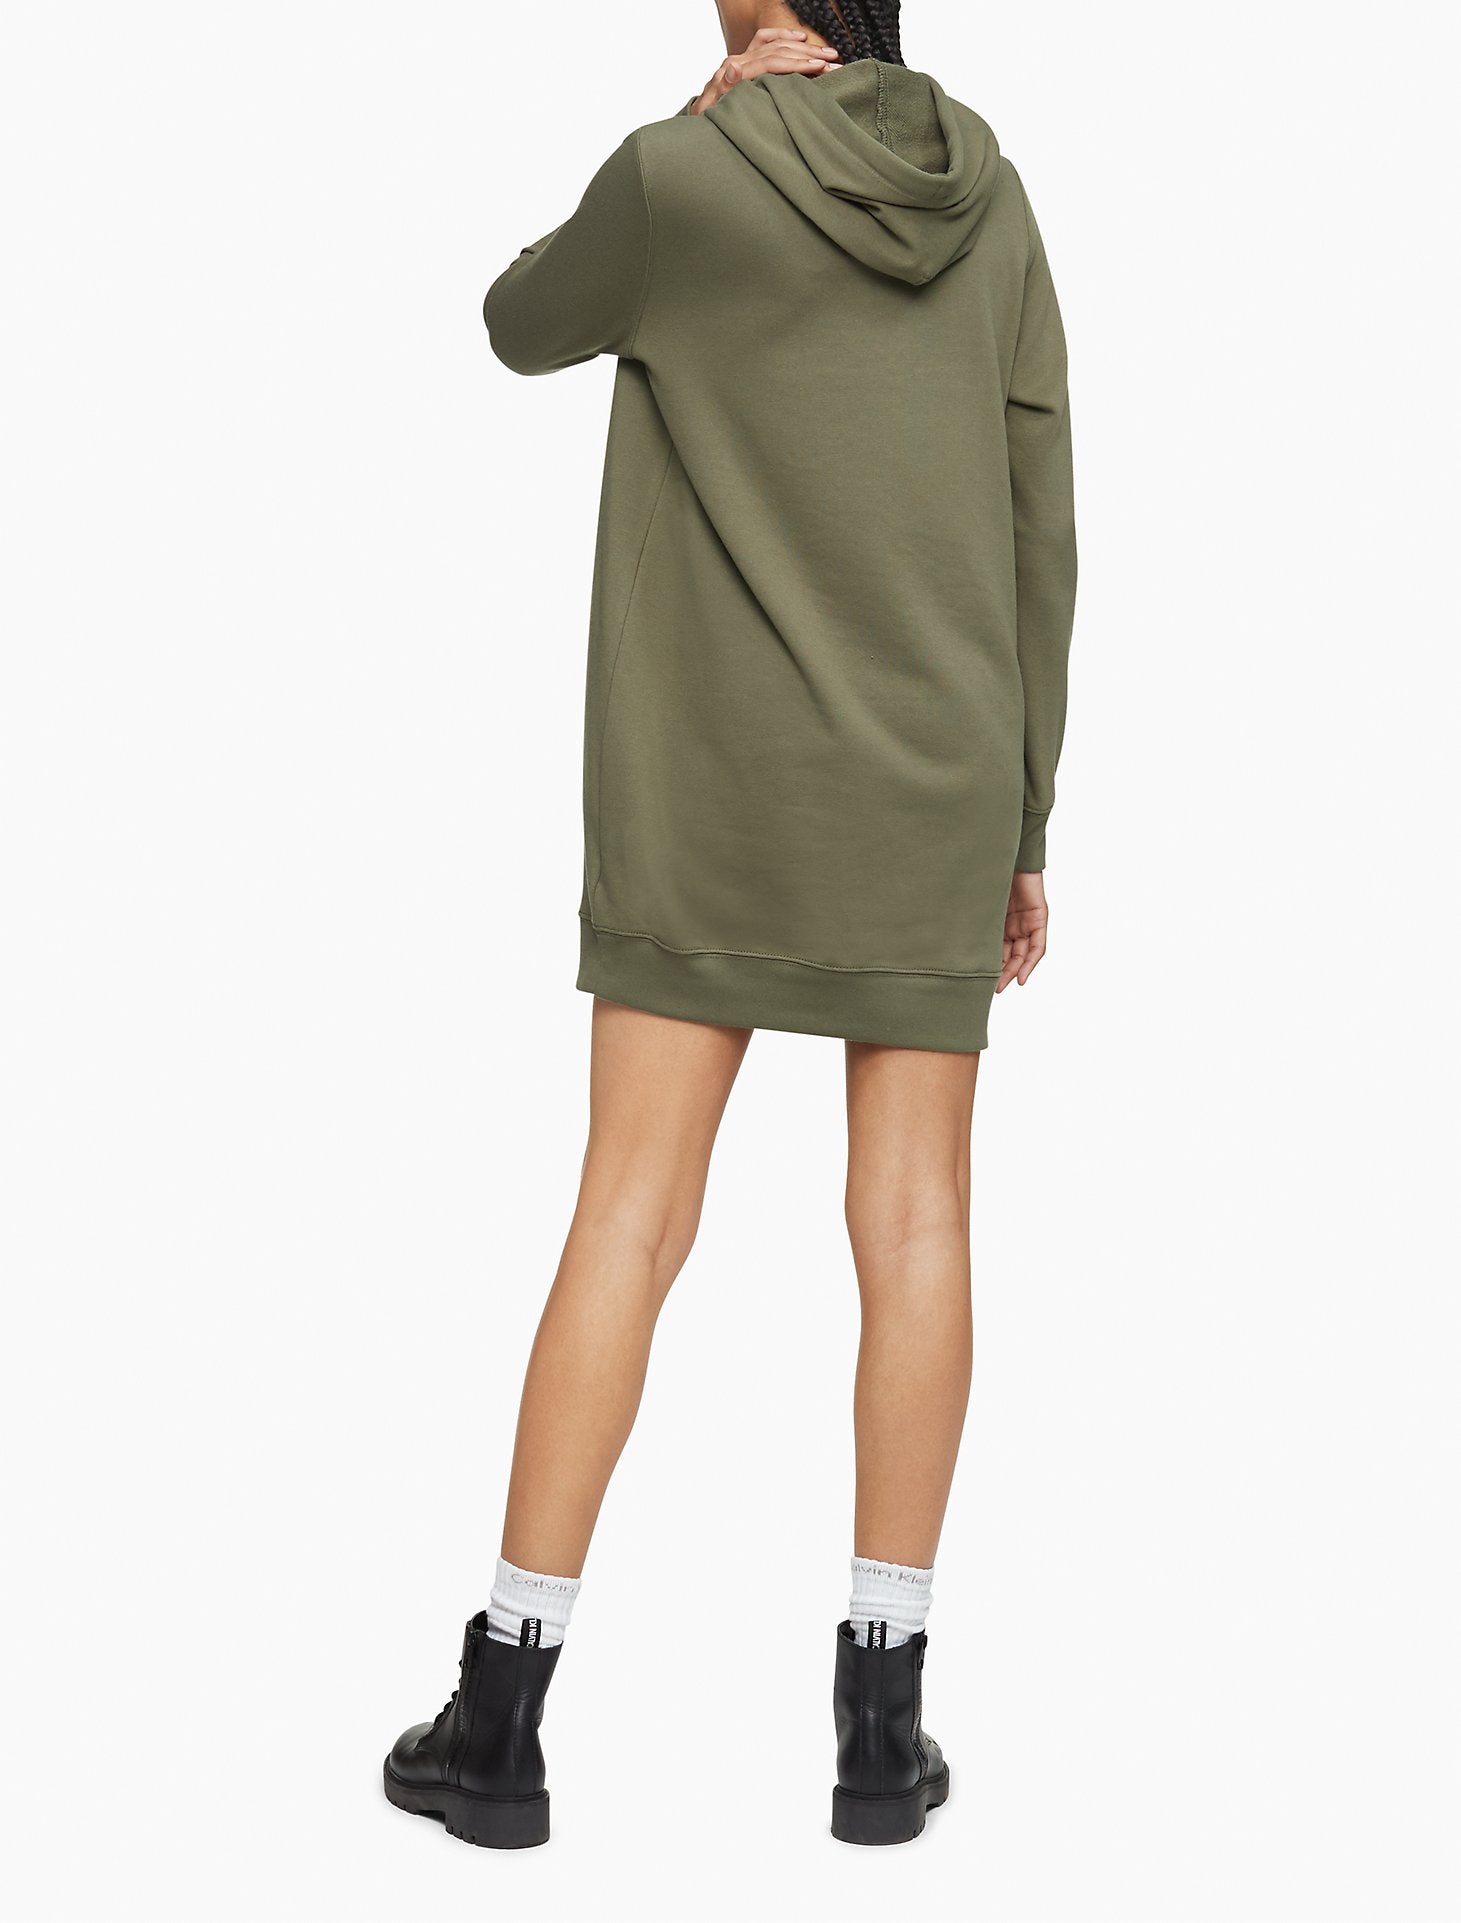 Calvin Klein French Terry Hooded Sweatshirt Dress - Women